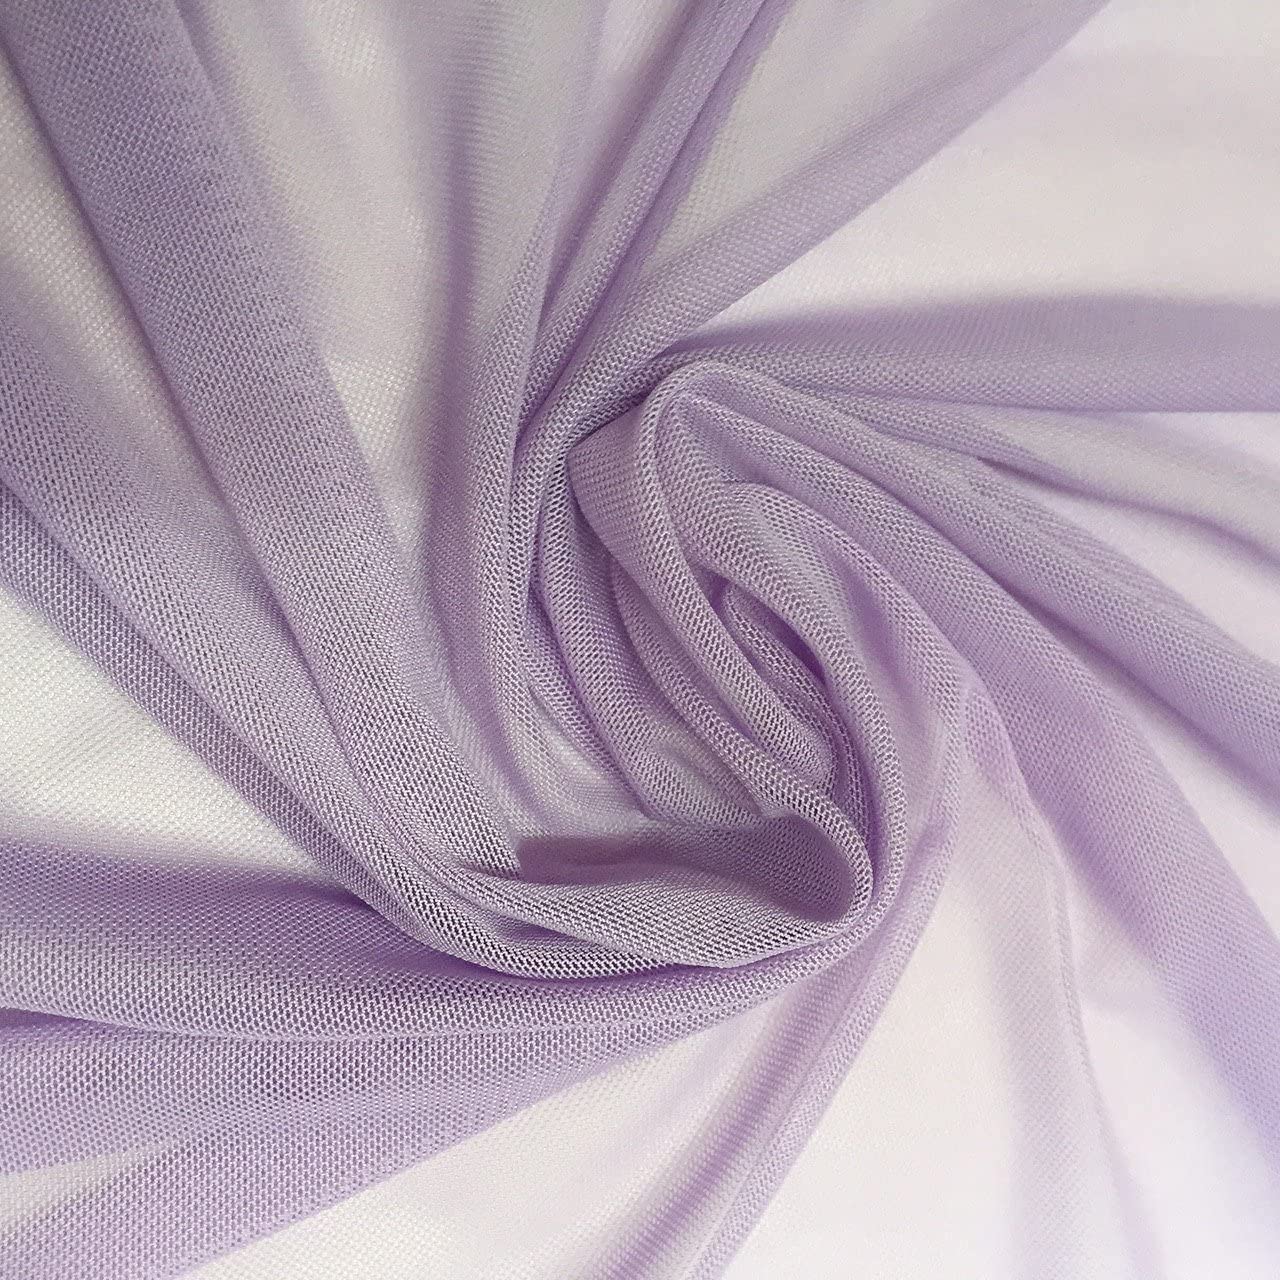 Solid Stretch Power Mesh Fabric Nylon Spandex (1 Yard, Lilac)